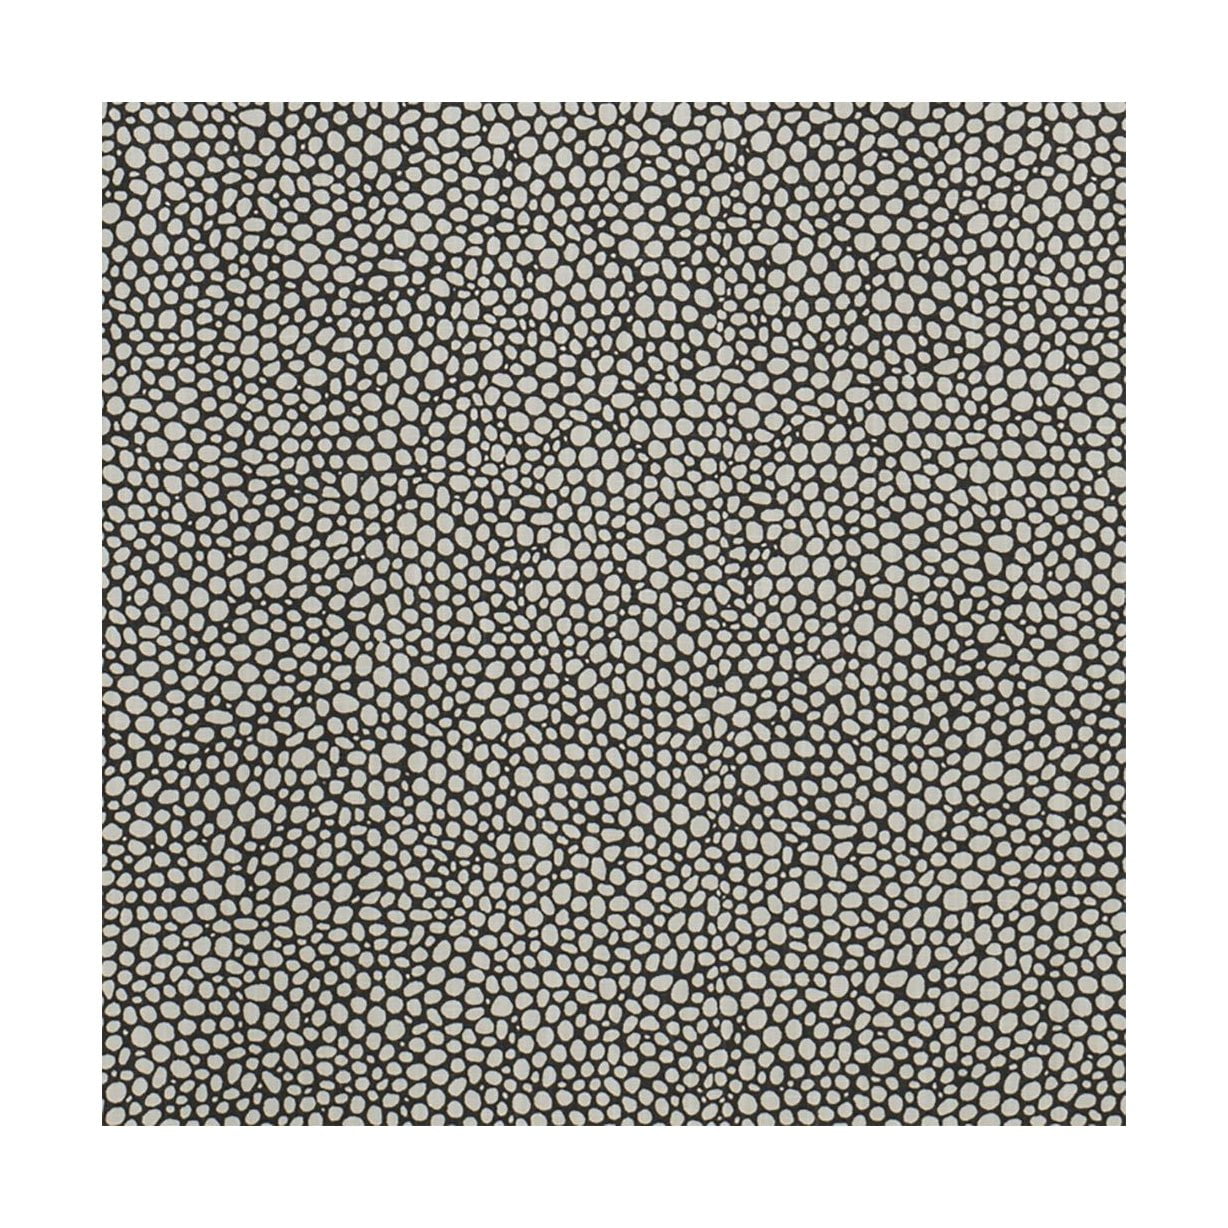 Spira Dotte Fabric Width 150 Cm (Price Per Meter), Asphalt